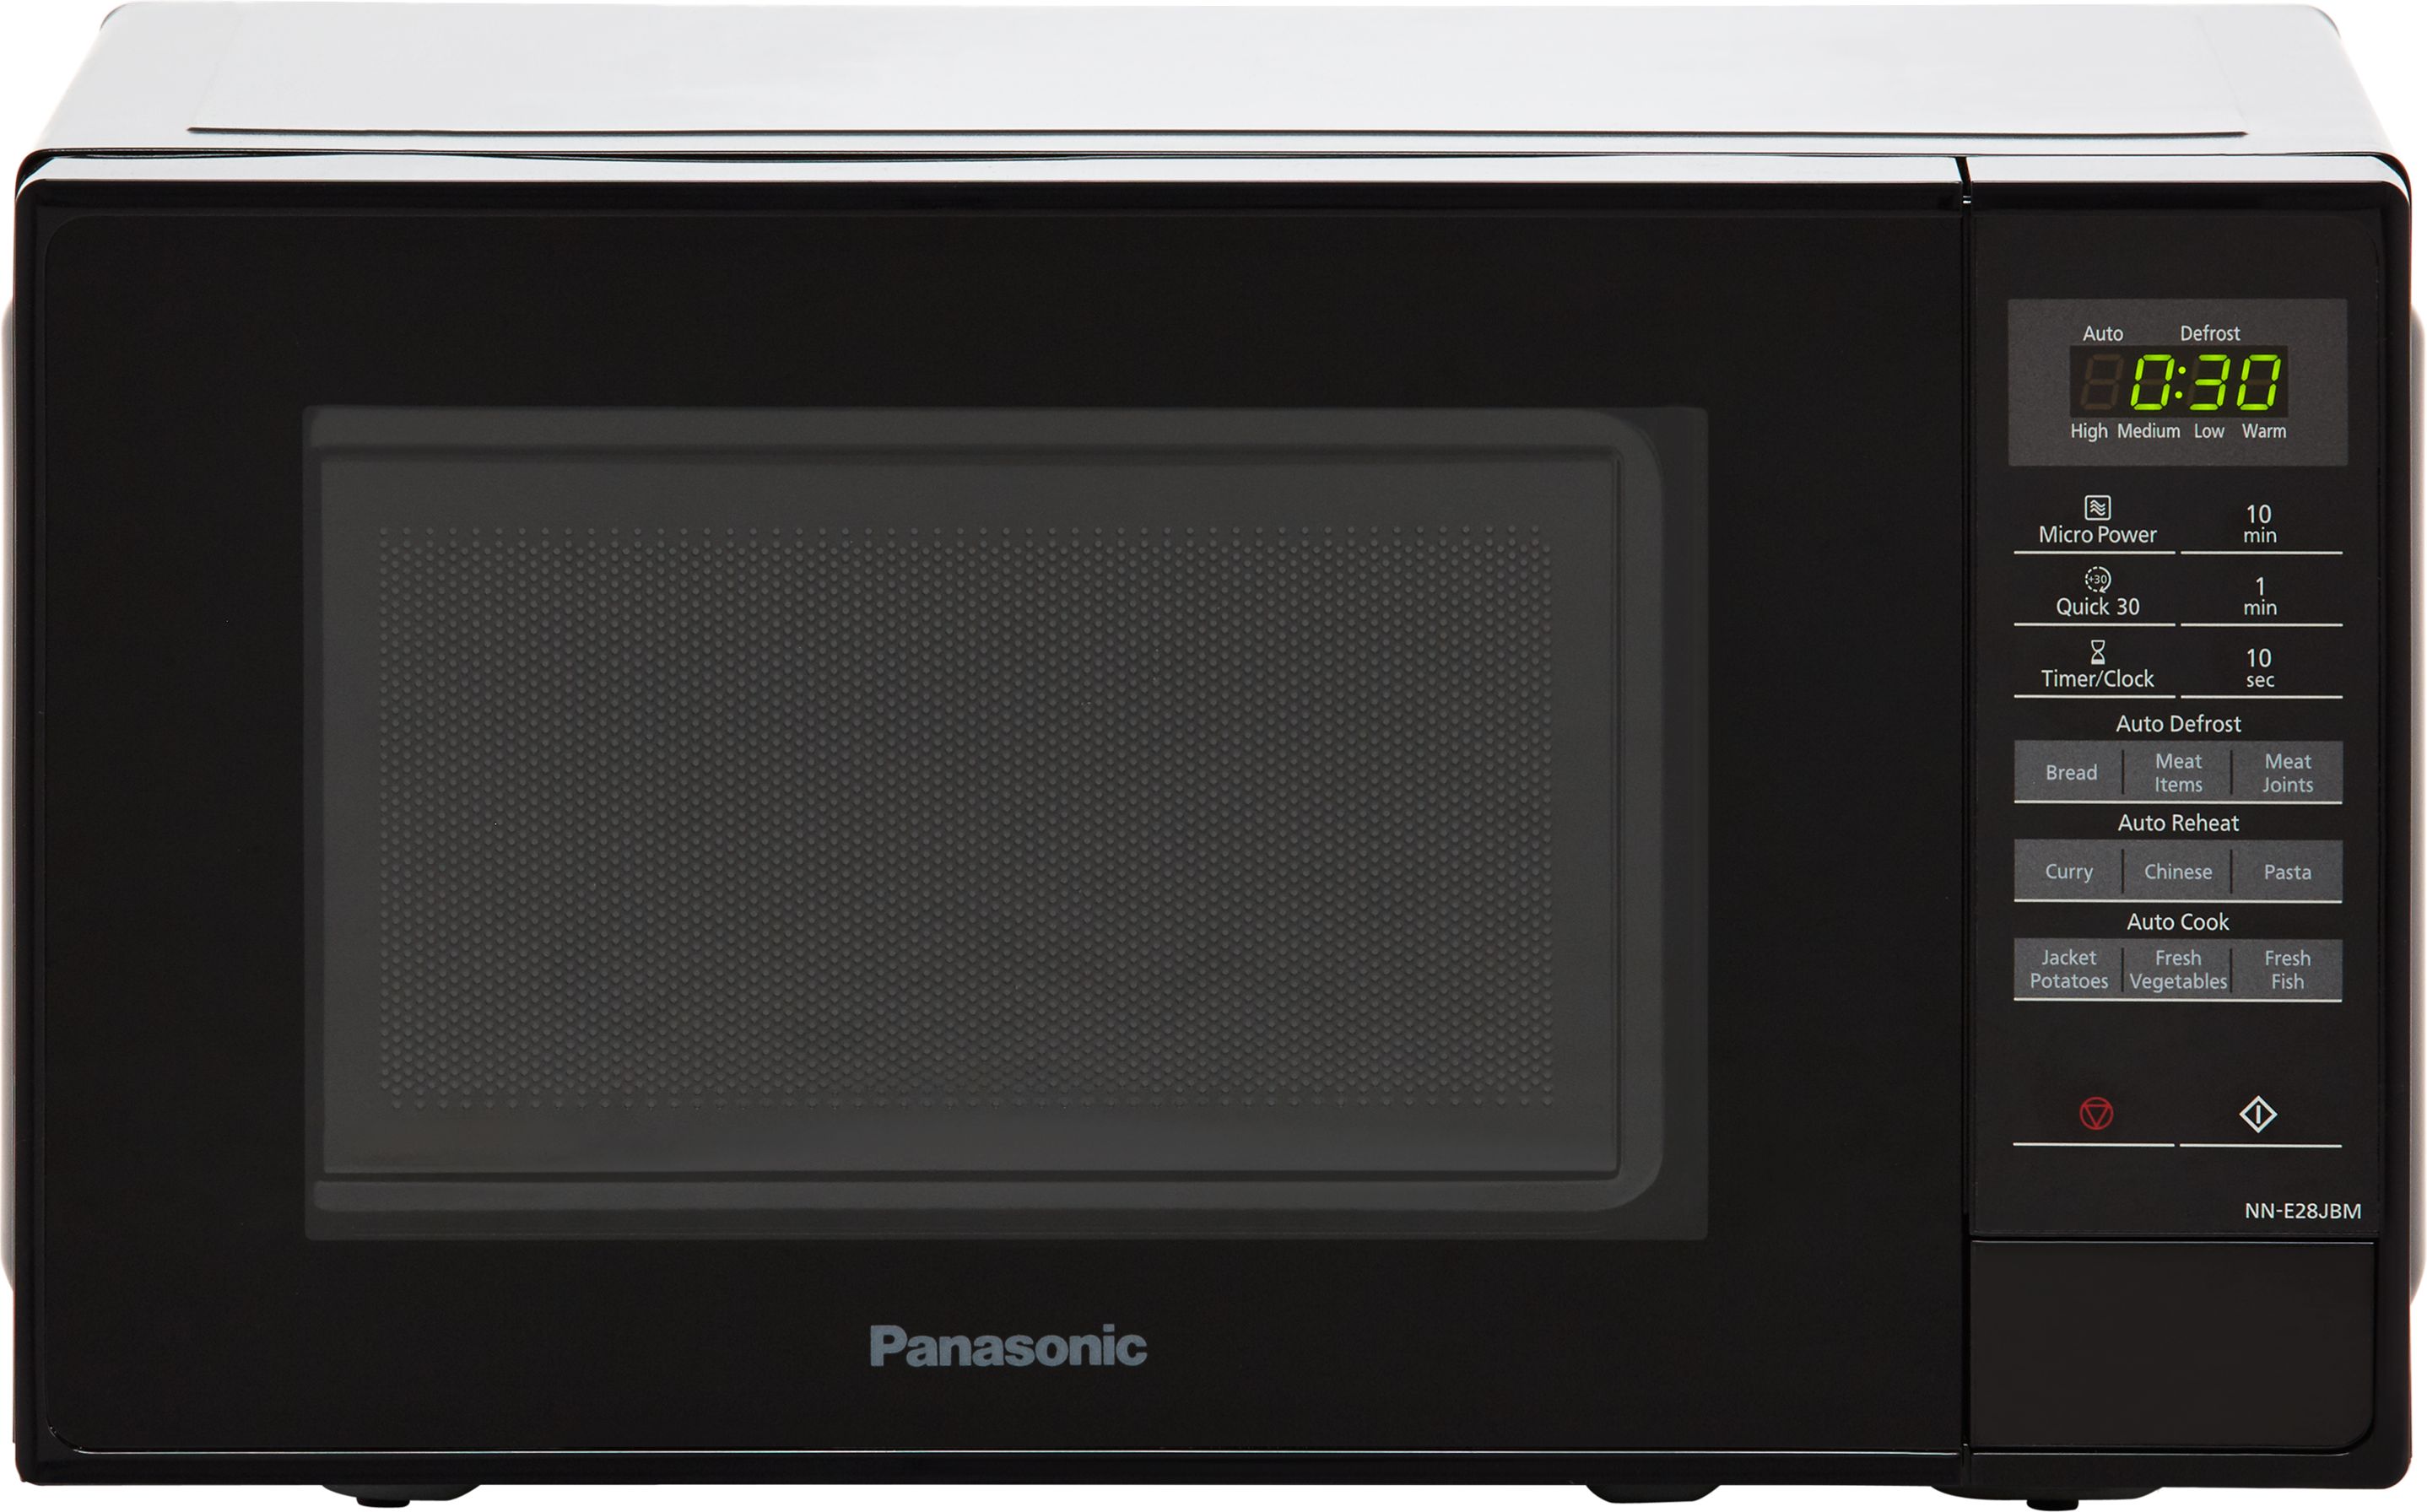 Panasonic NN-E28JBMBPQ 26cm tall, 44cm wide, Freestanding Compact Microwave - Black, Black